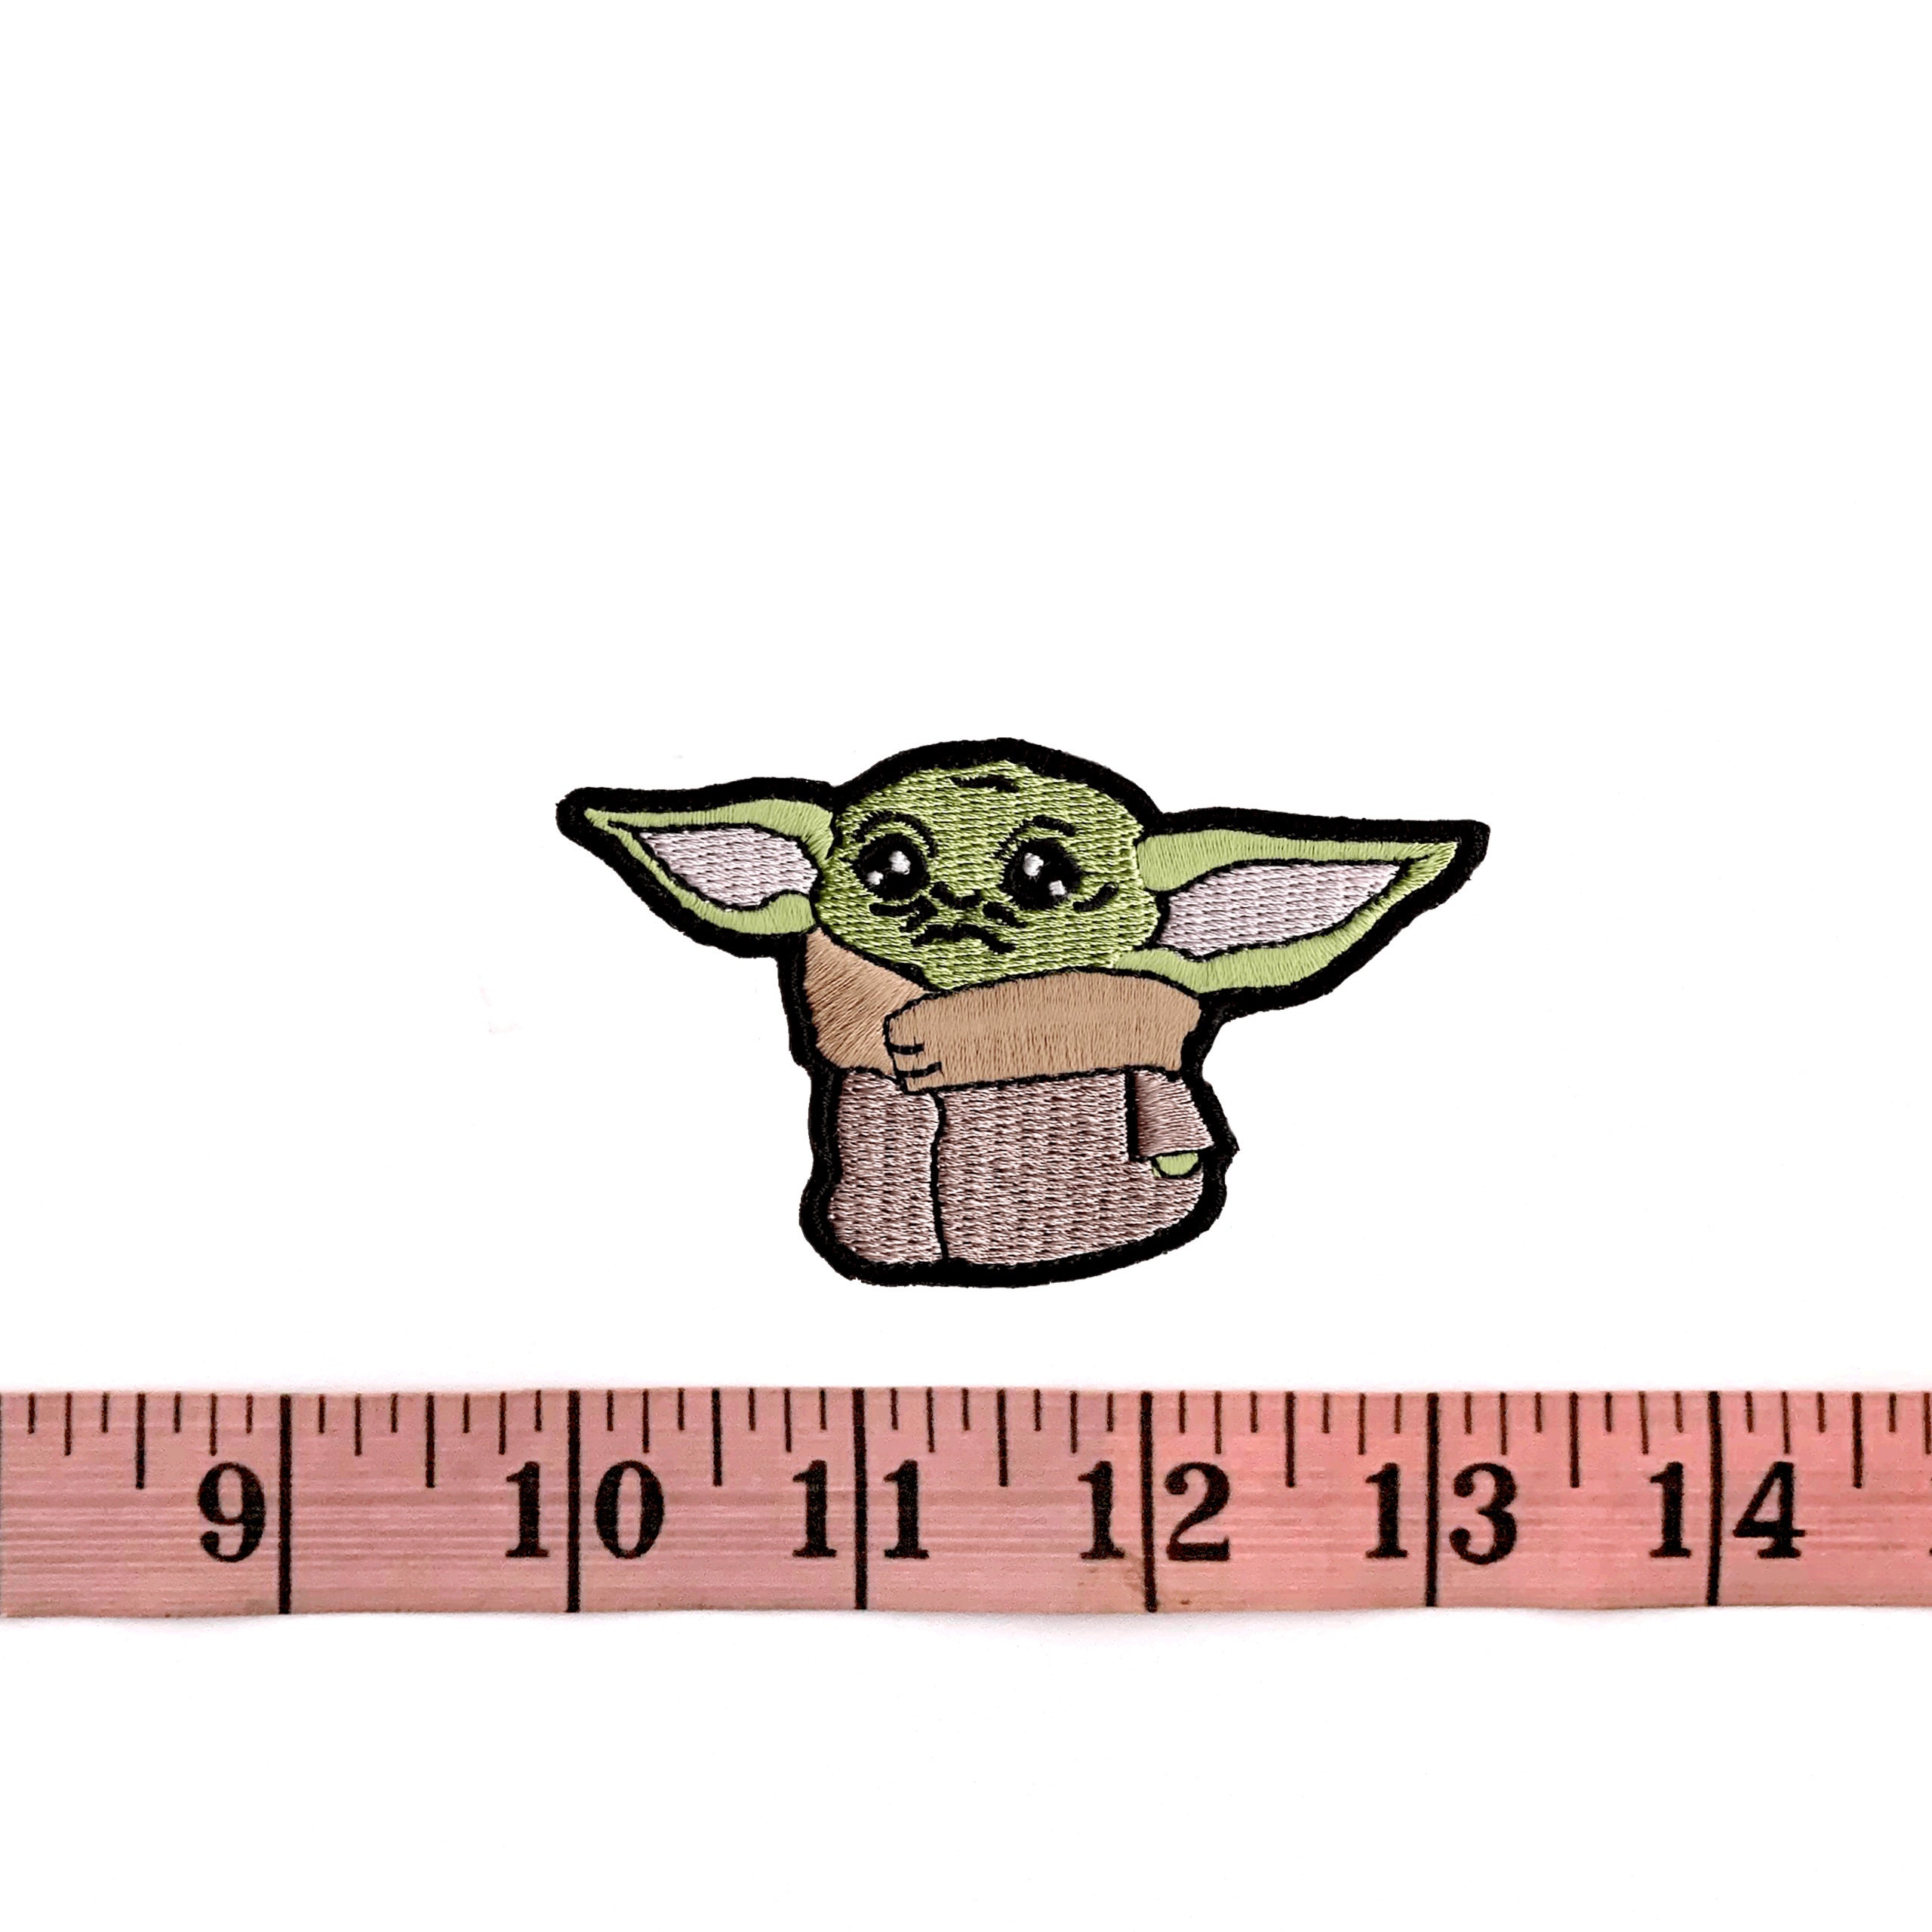 Felpudo Star Wars Yoda por 27,90 € 